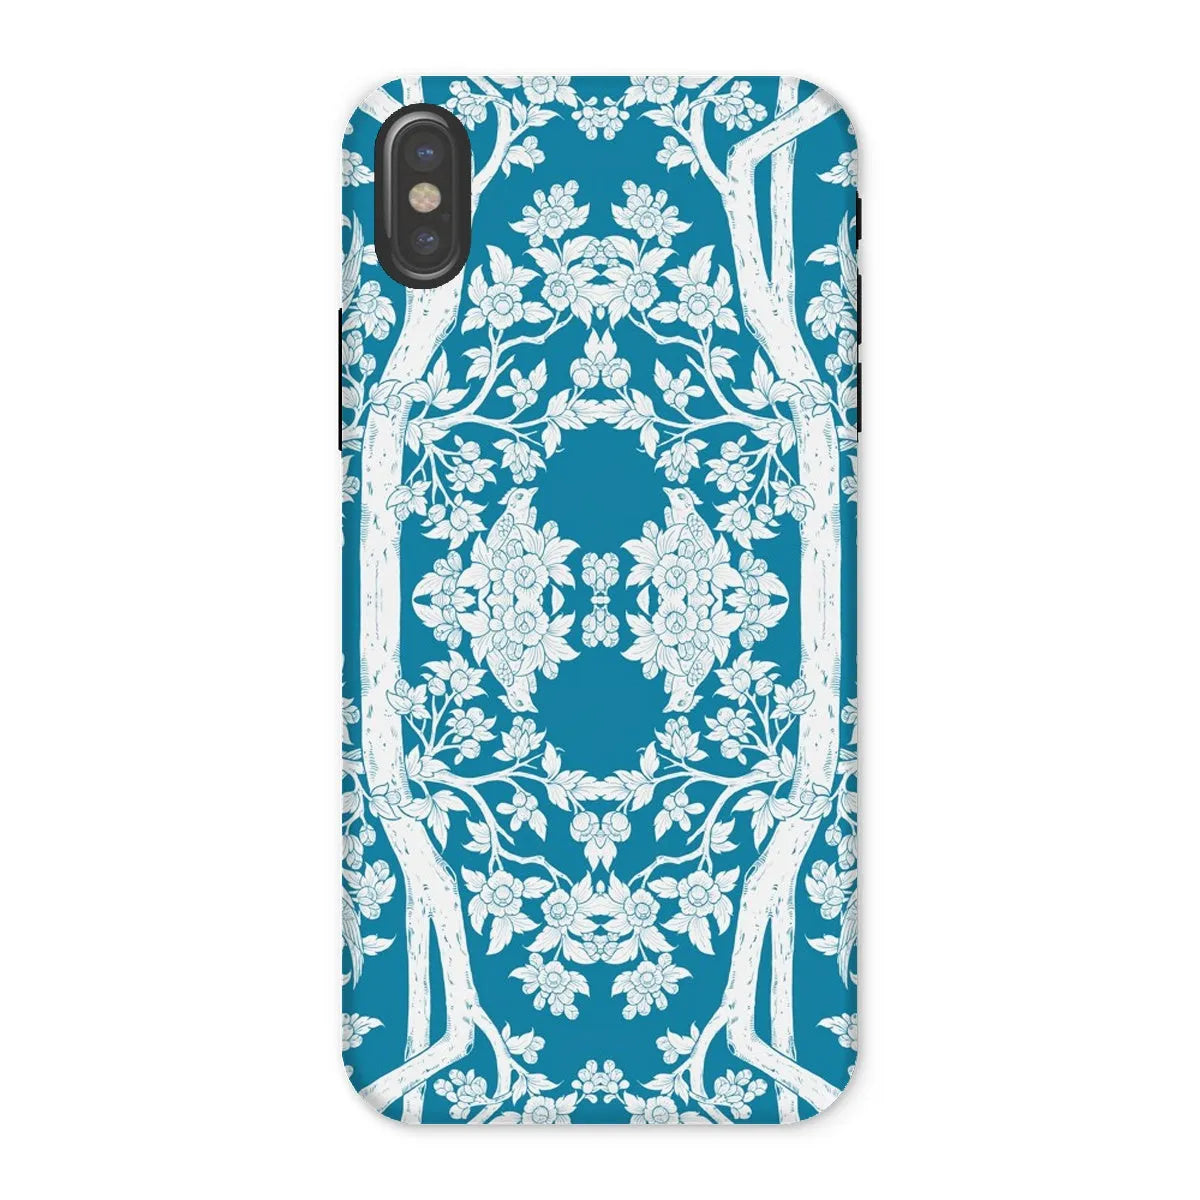 Aviary Blue Aesthetic Pattern Art Phone Case - Iphone x / Matte - Mobile Phone Cases - Aesthetic Art